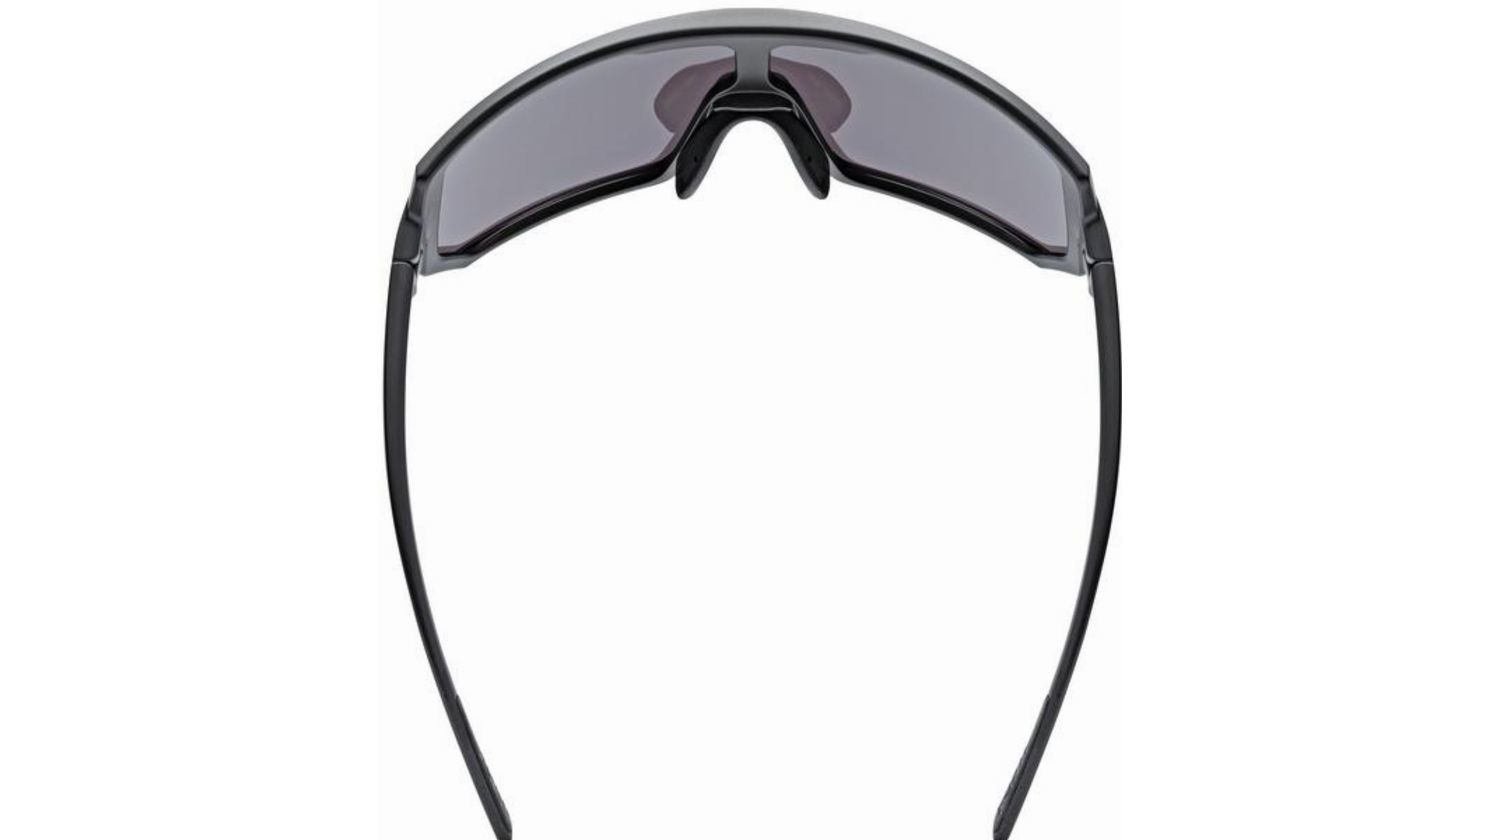 Uvex Sportstyle 235 MTB Brille black matt/mirror lavender